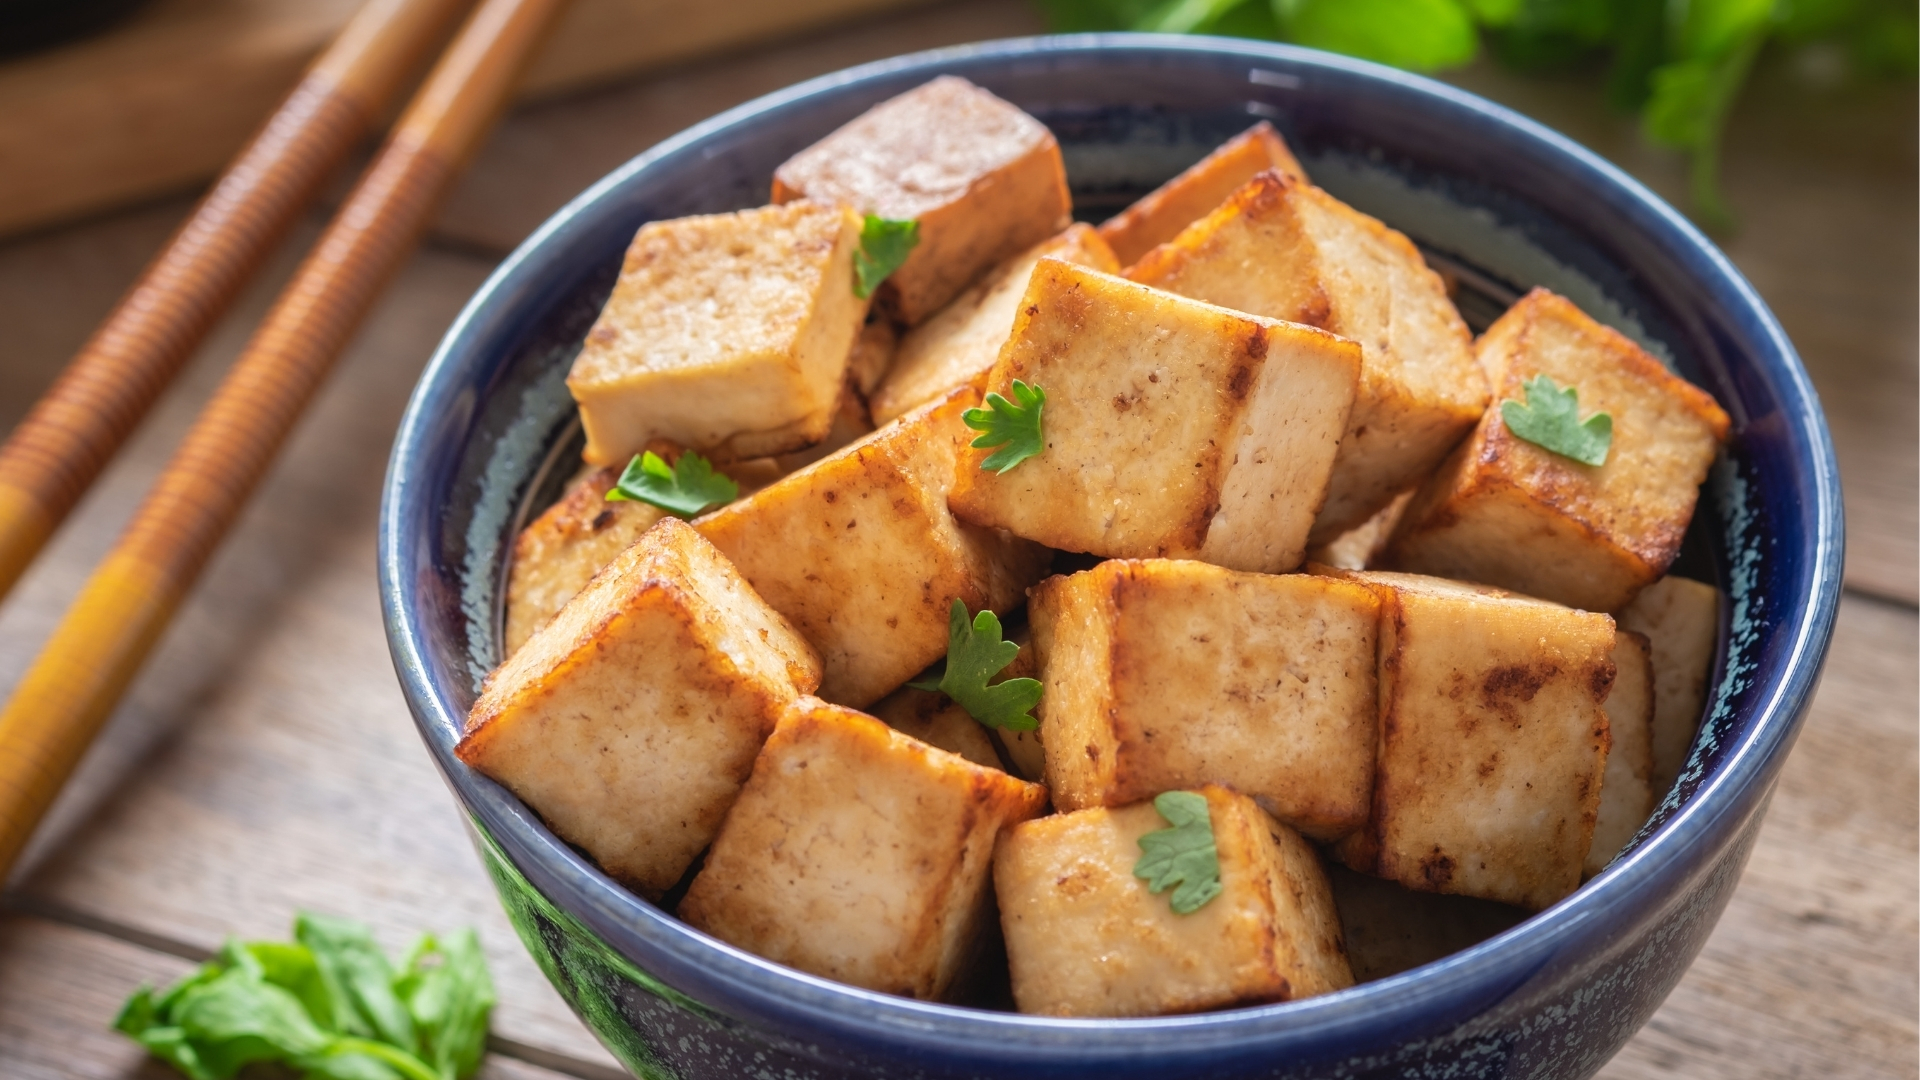 fried tofu in a bowl